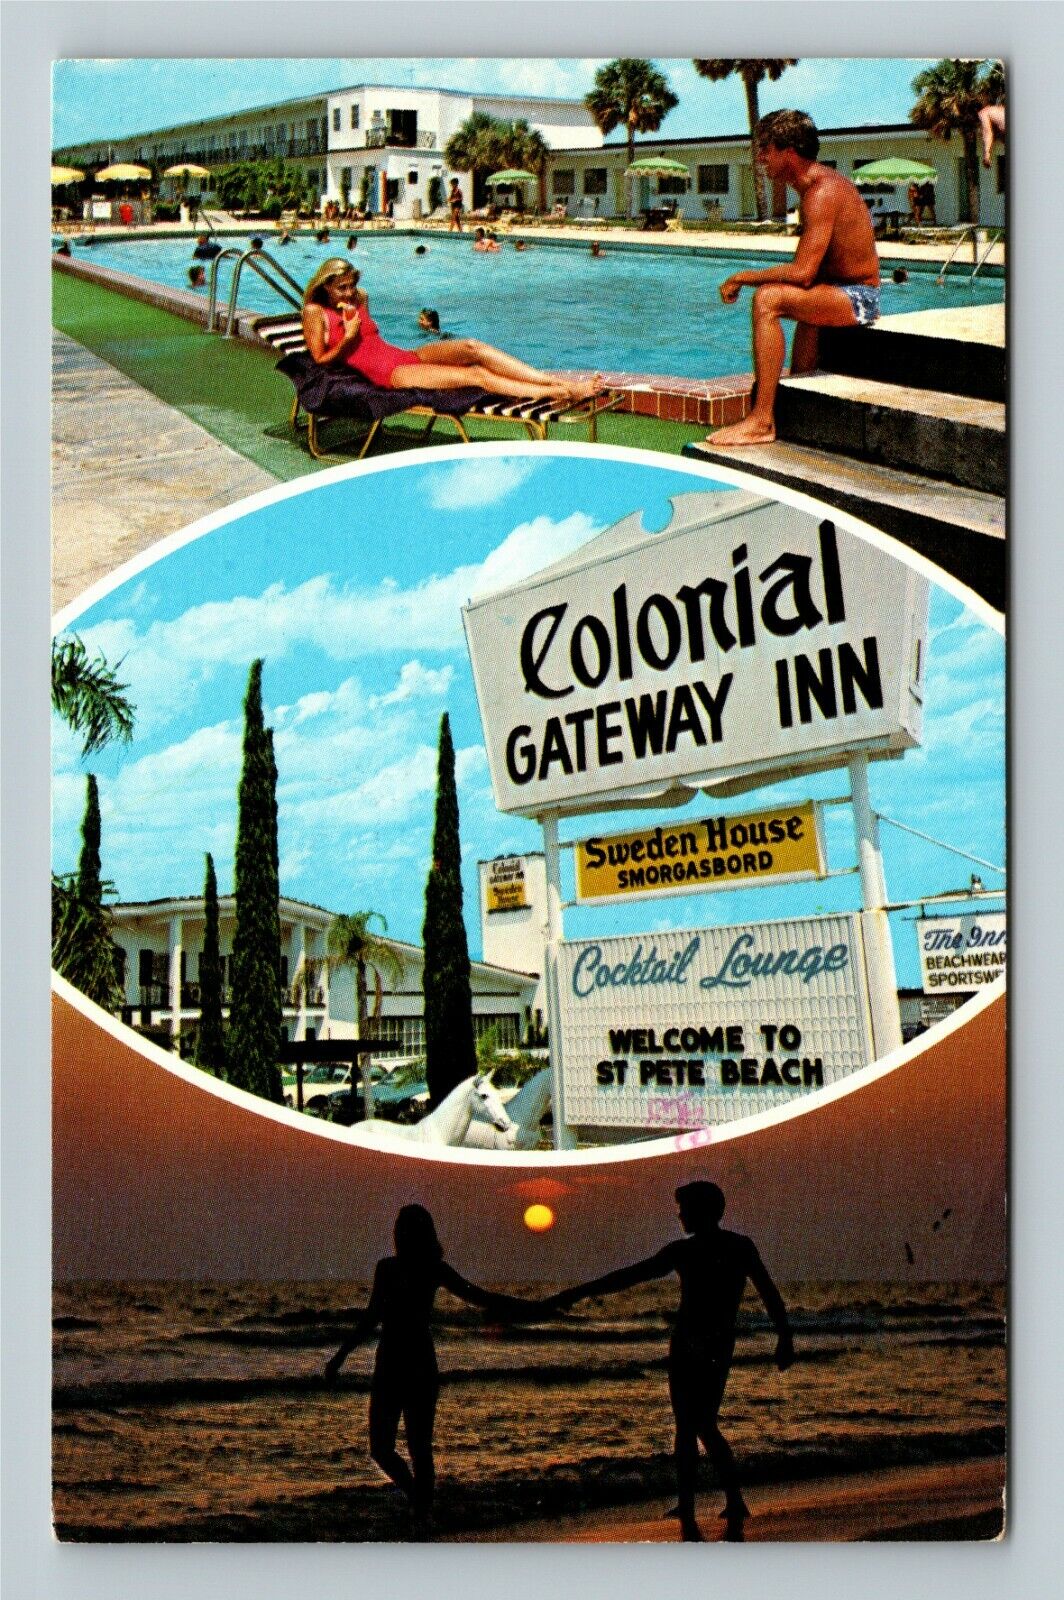 St Pete Beach FL-Florida, Colonial Gateway Inn Antique Vintage Souvenir Postcard